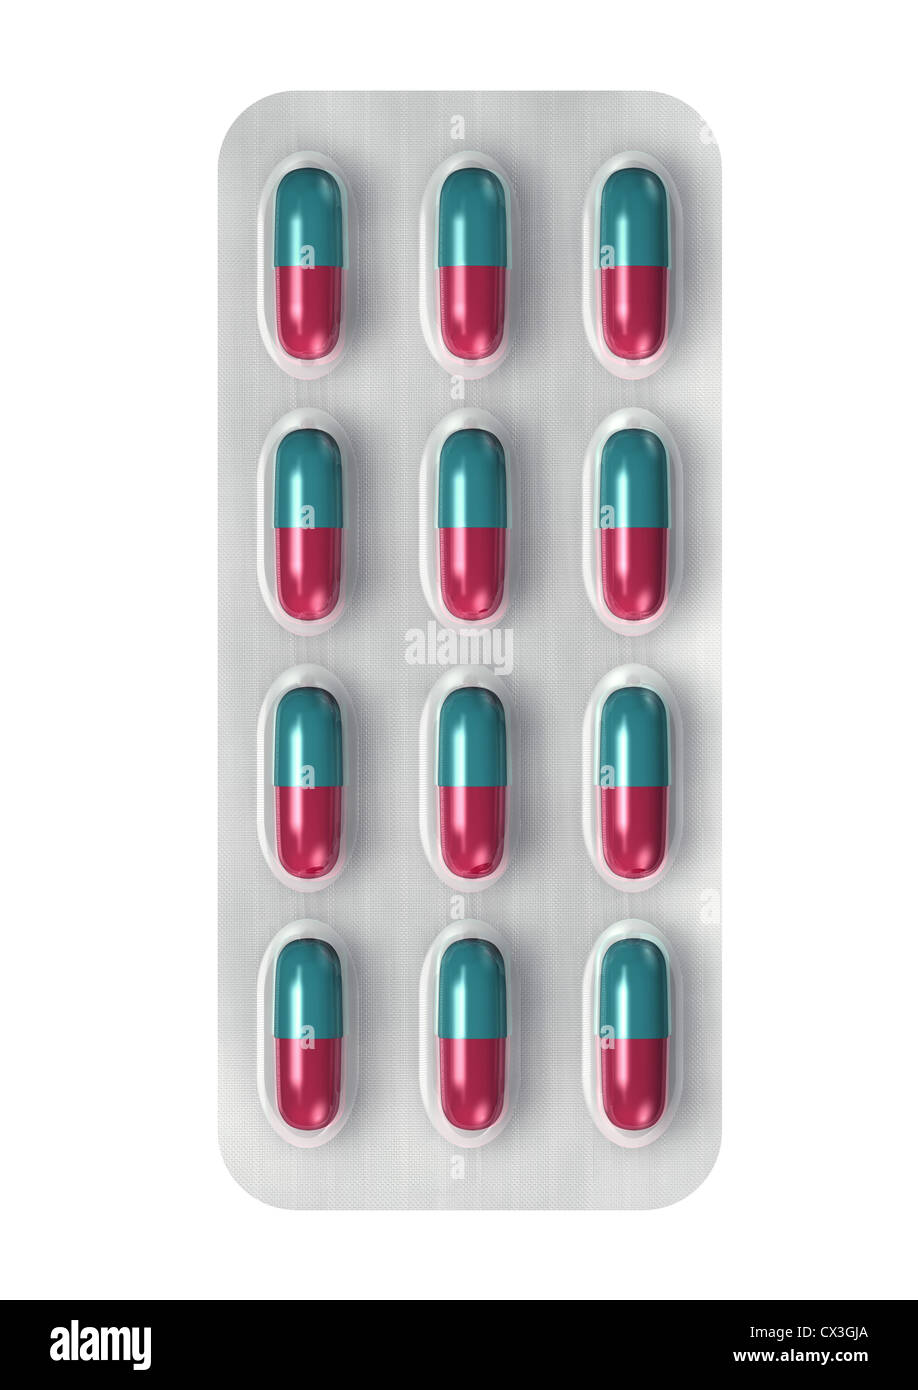 En Blíster Rot-Grüne Kapseln einer Verpackung aus weiß - Rojo-verde cápsulas con la medicina en un blister Foto de stock